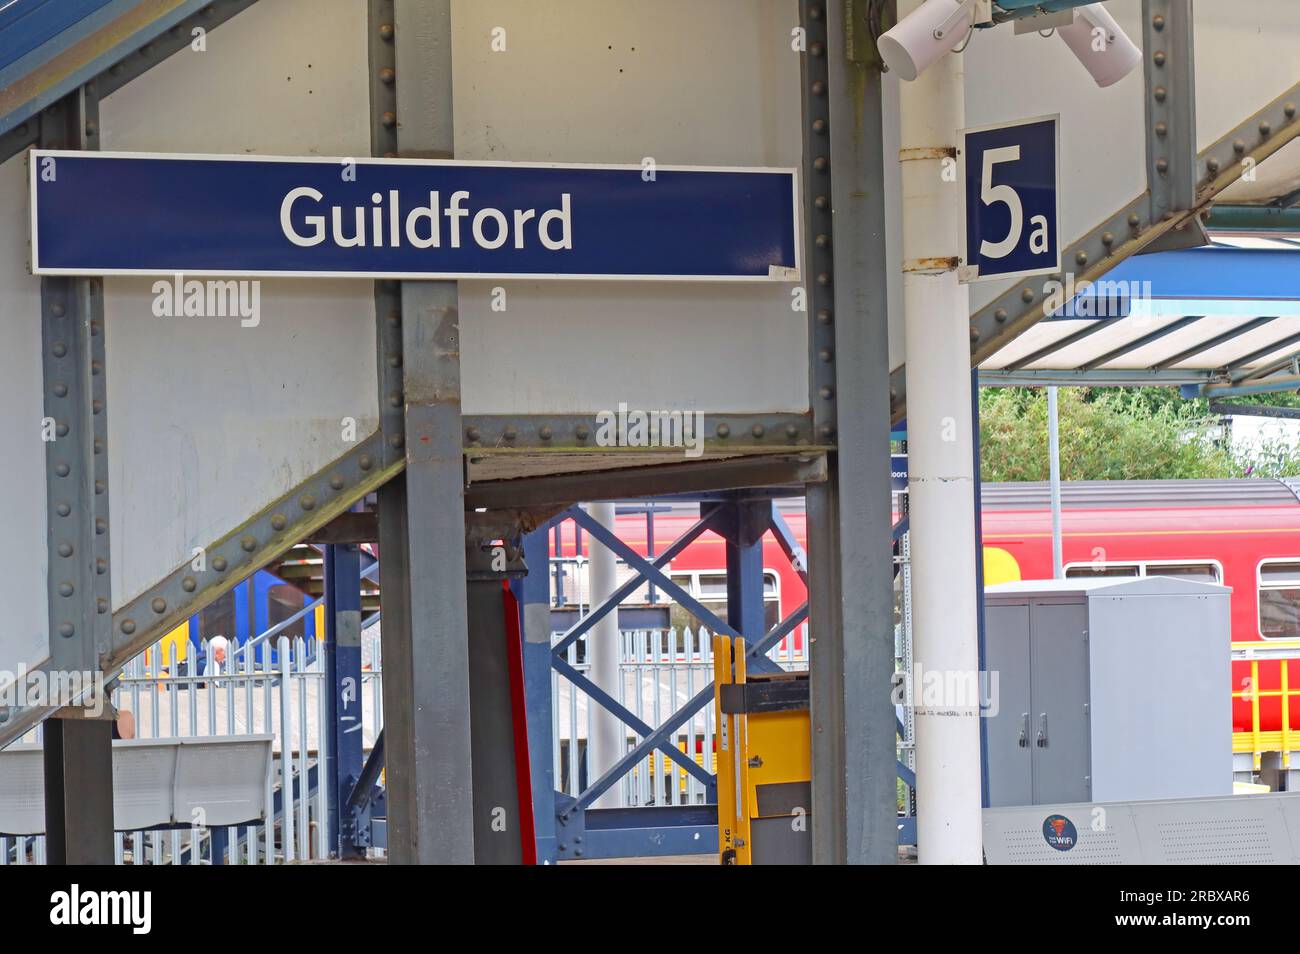 Gare de Guildford, plate-forme 5a, Surrey, Angleterre, Royaume-Uni, GU1 4UG Banque D'Images